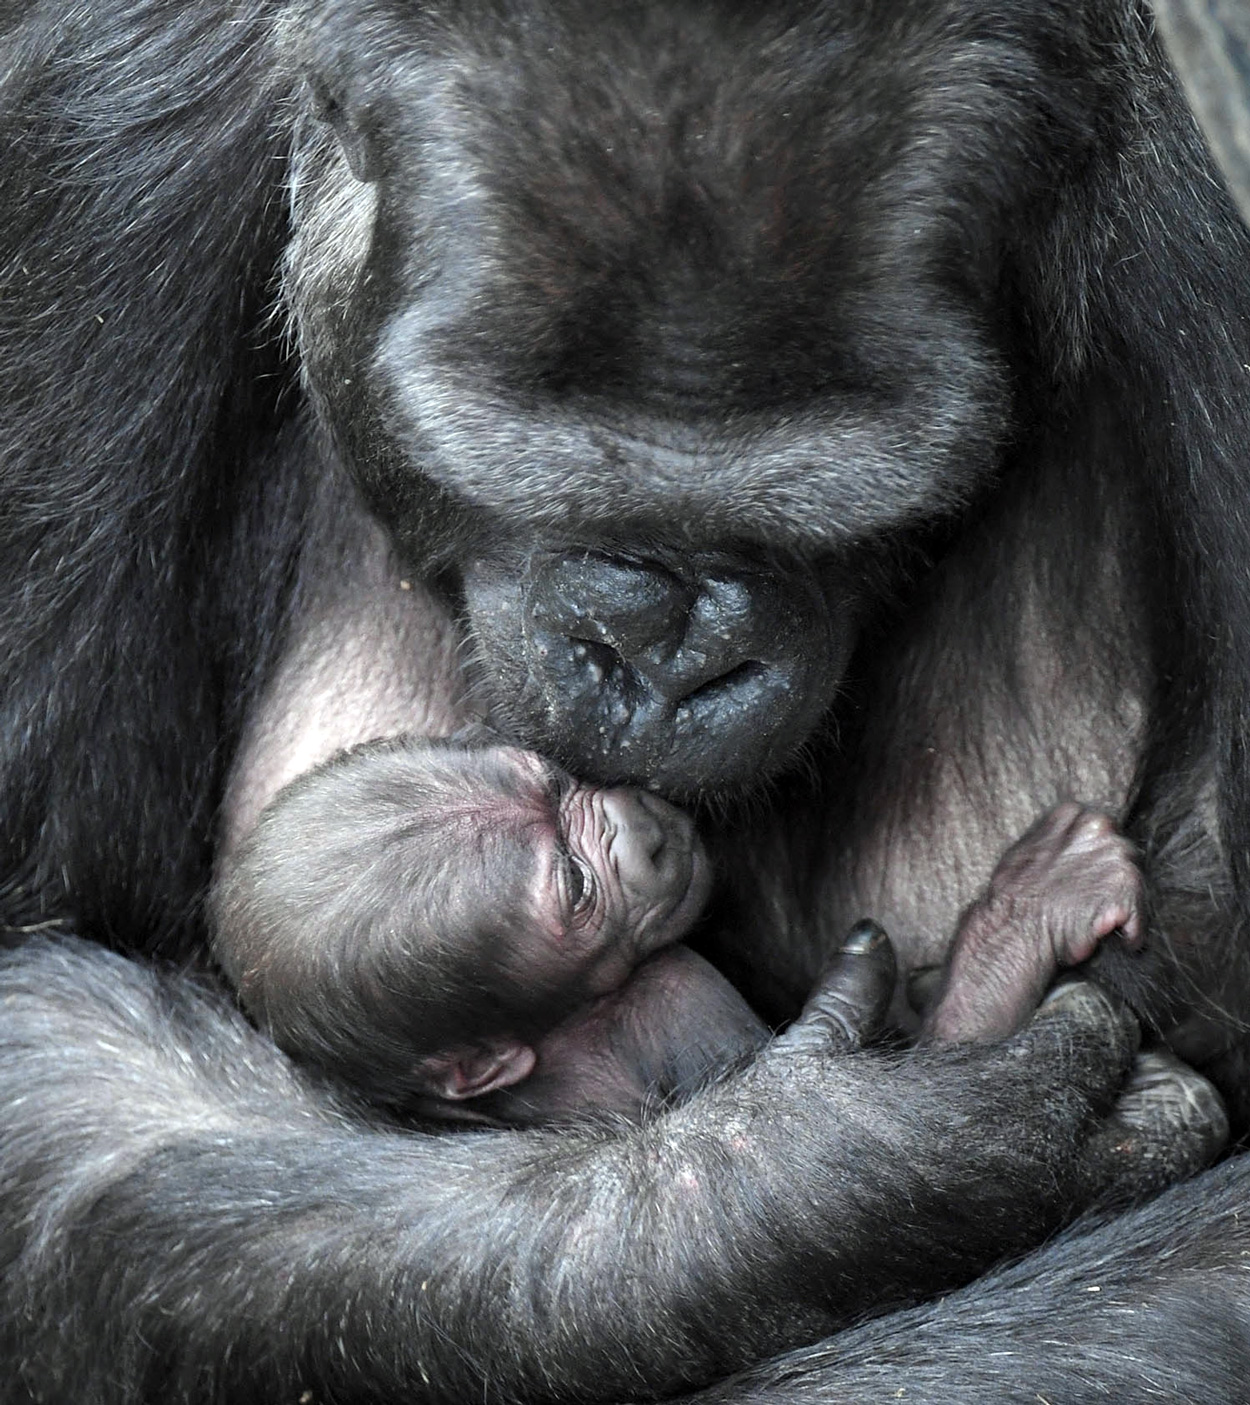 Baby Gorilla born June 1, 2018, Brookfield Zoo